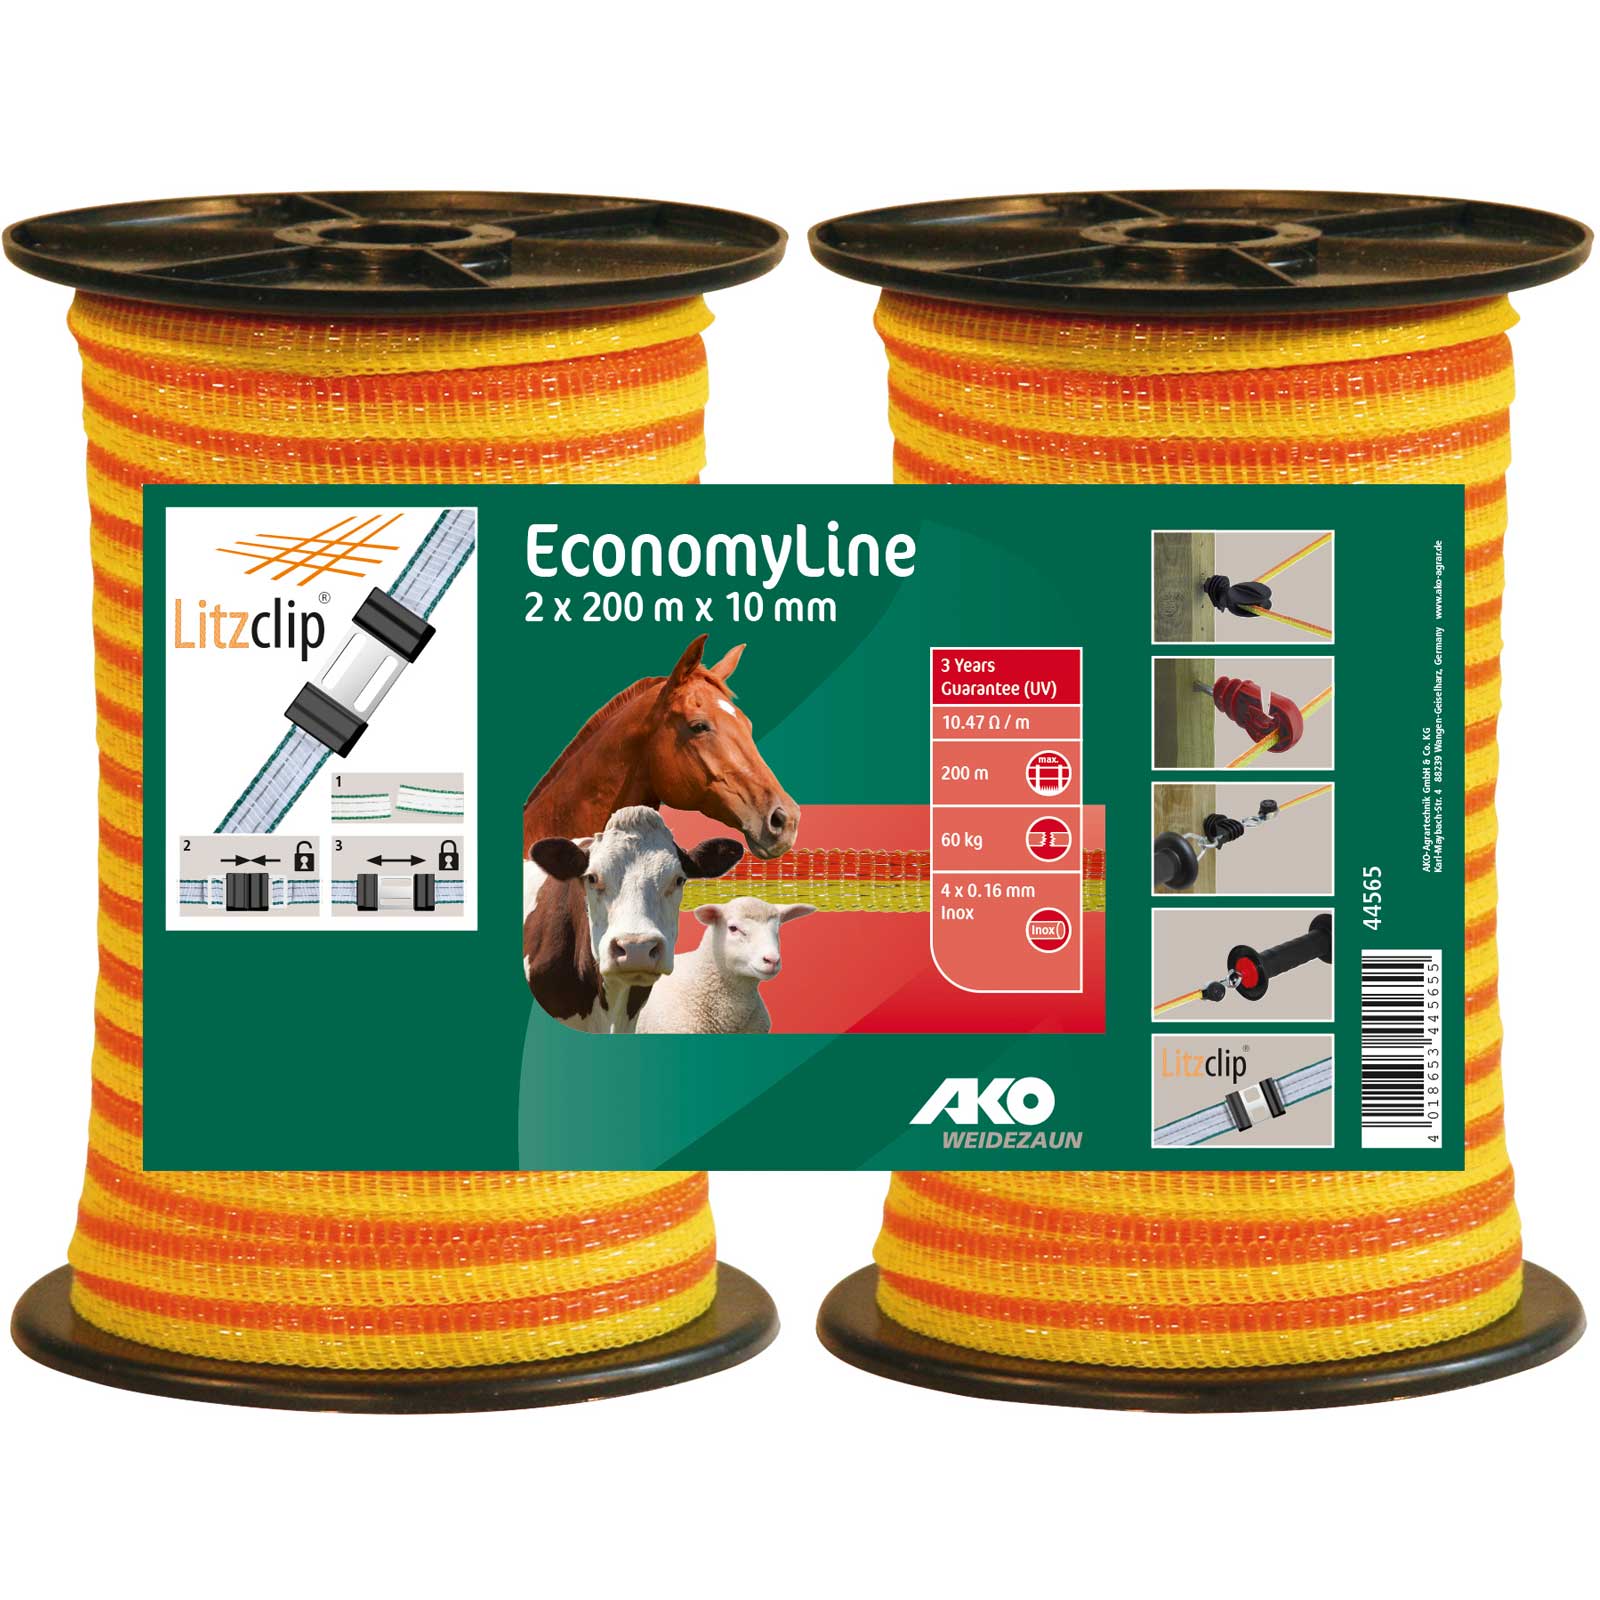 Ako Pasture Fence Tape EconomyLine 400m, 10mm, 4x0.16 Niro, yellow-orange